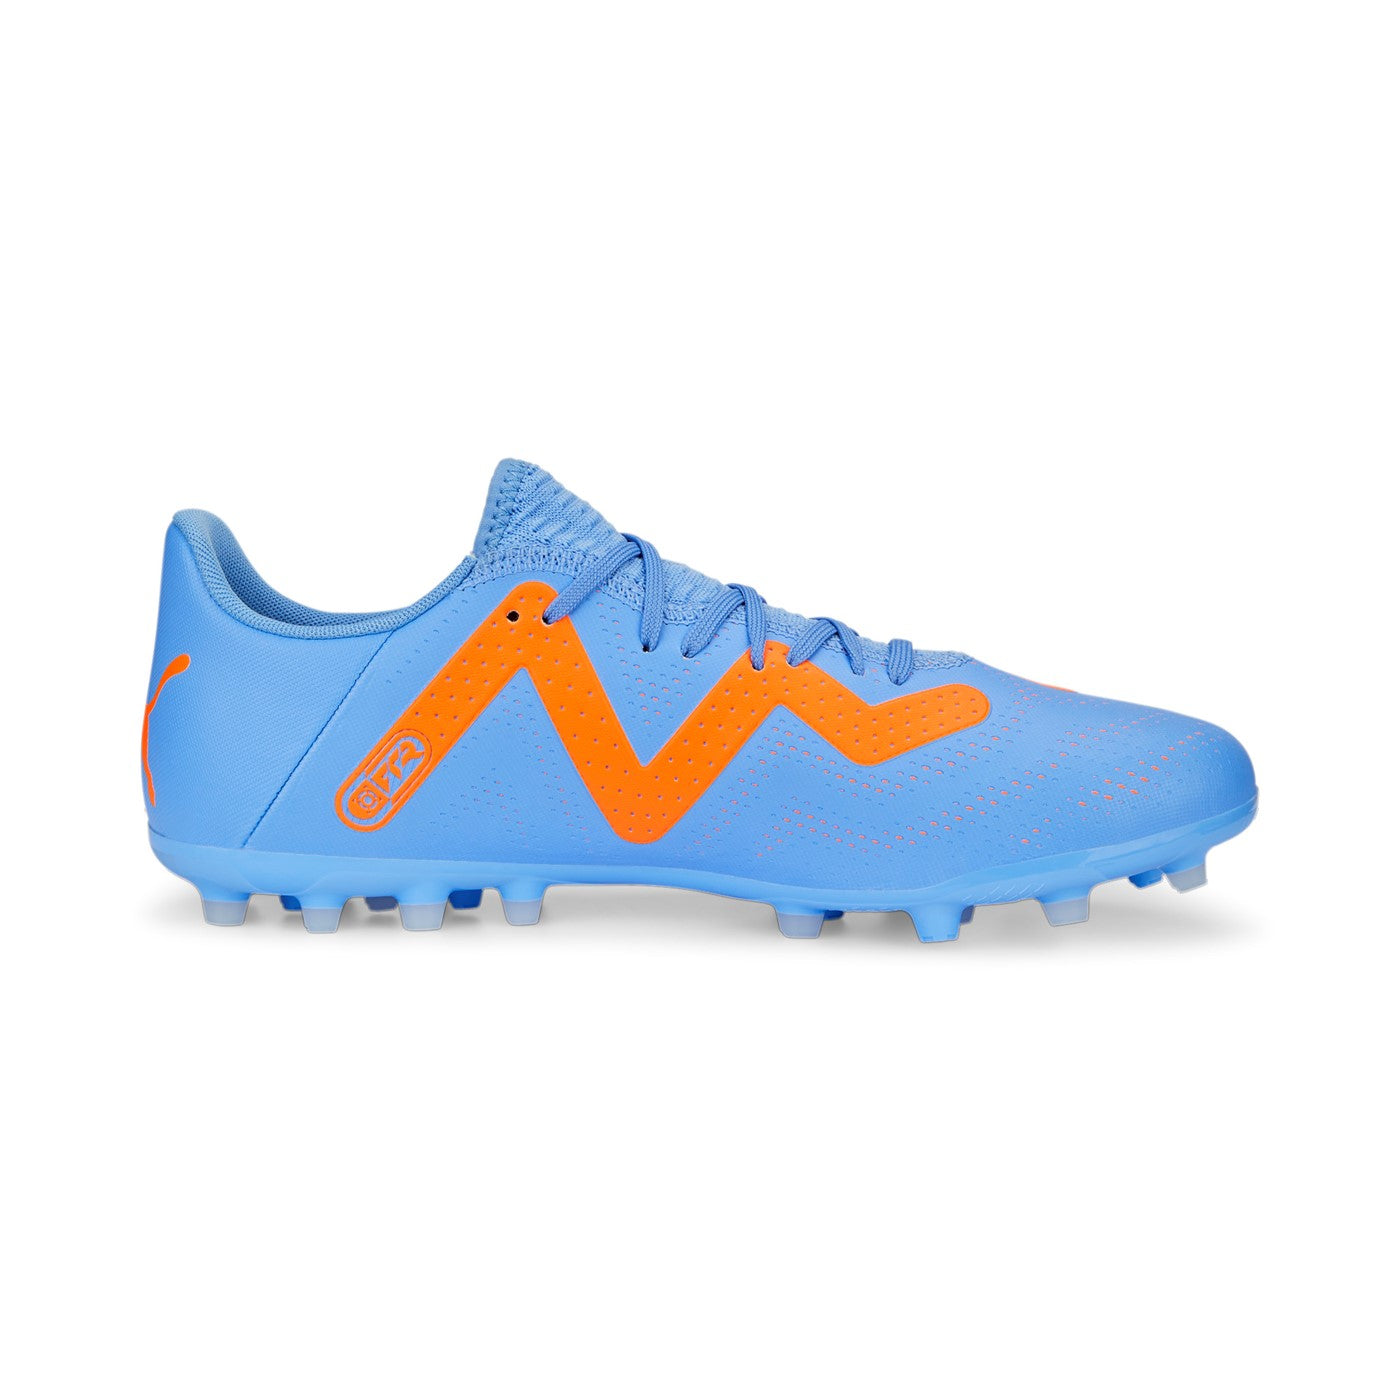 Puma scarpa da calcio da uomo Future Play MG 107190 01 blu bianco arancio